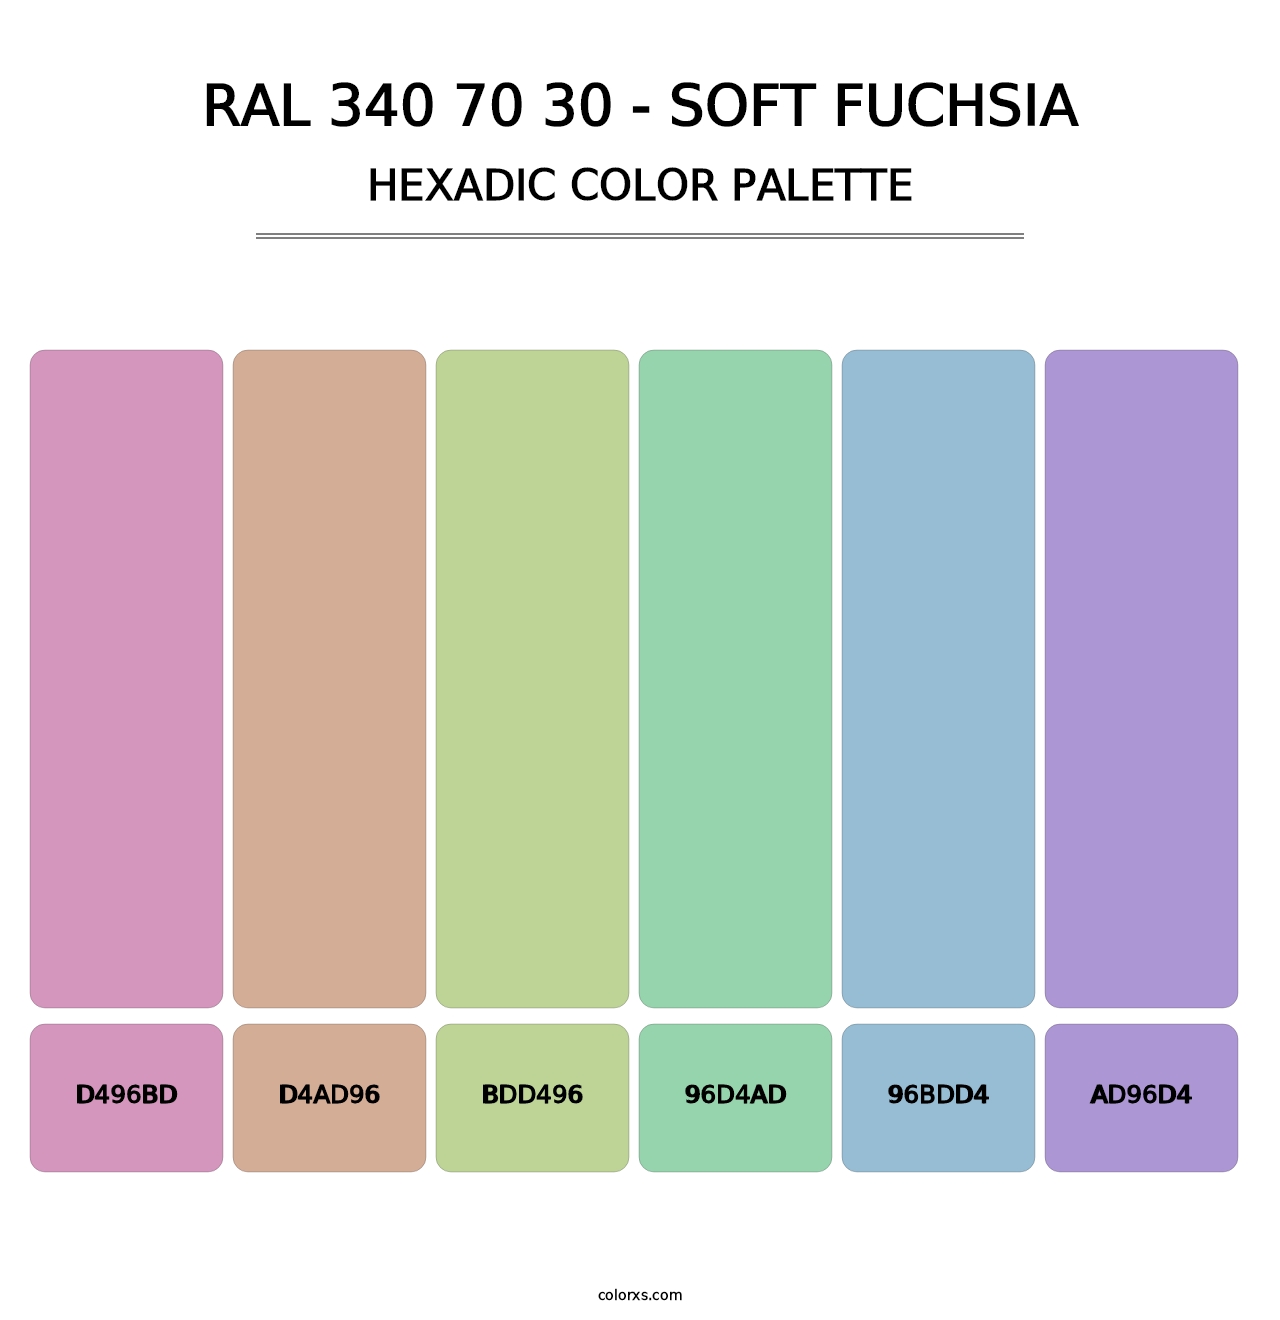 RAL 340 70 30 - Soft Fuchsia - Hexadic Color Palette